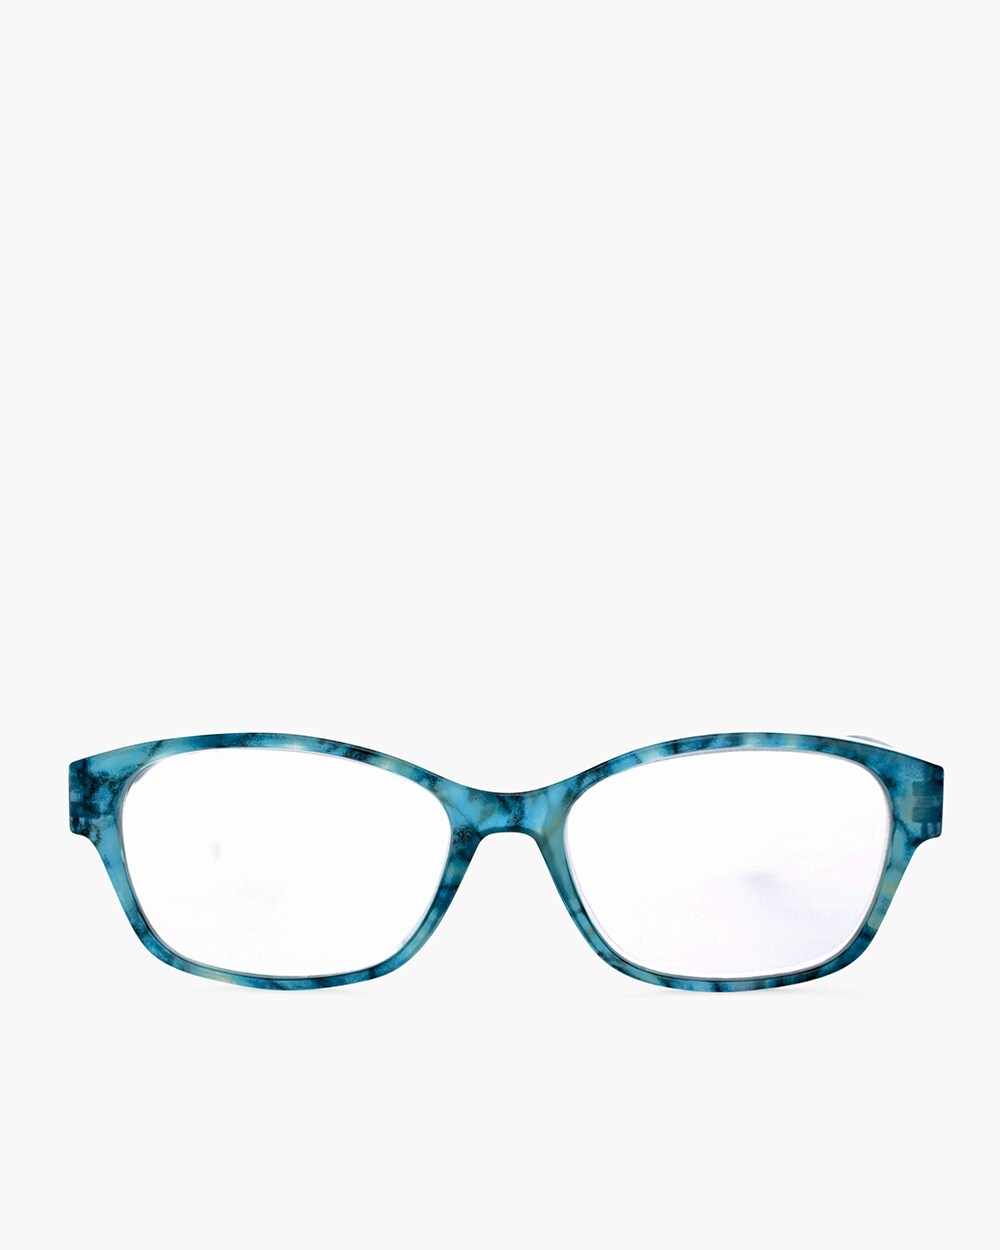 Printed Blue Reading Glasses